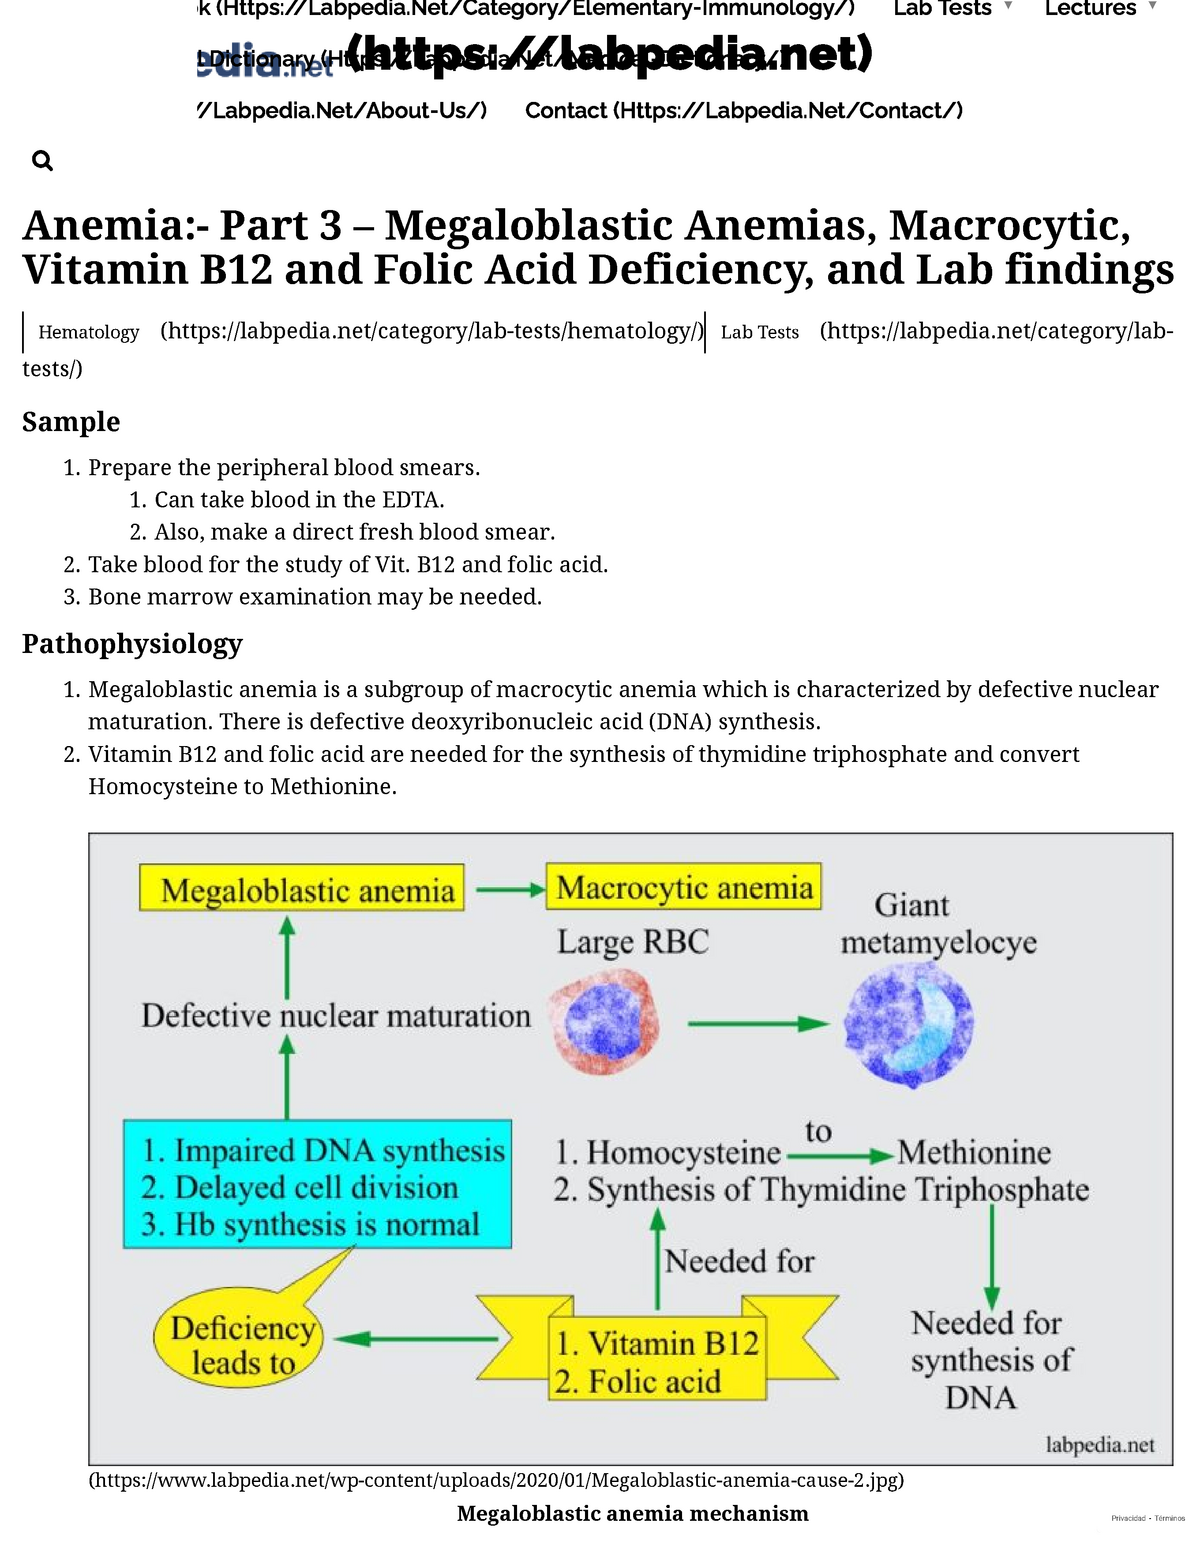 megaloblastic anemia pathway